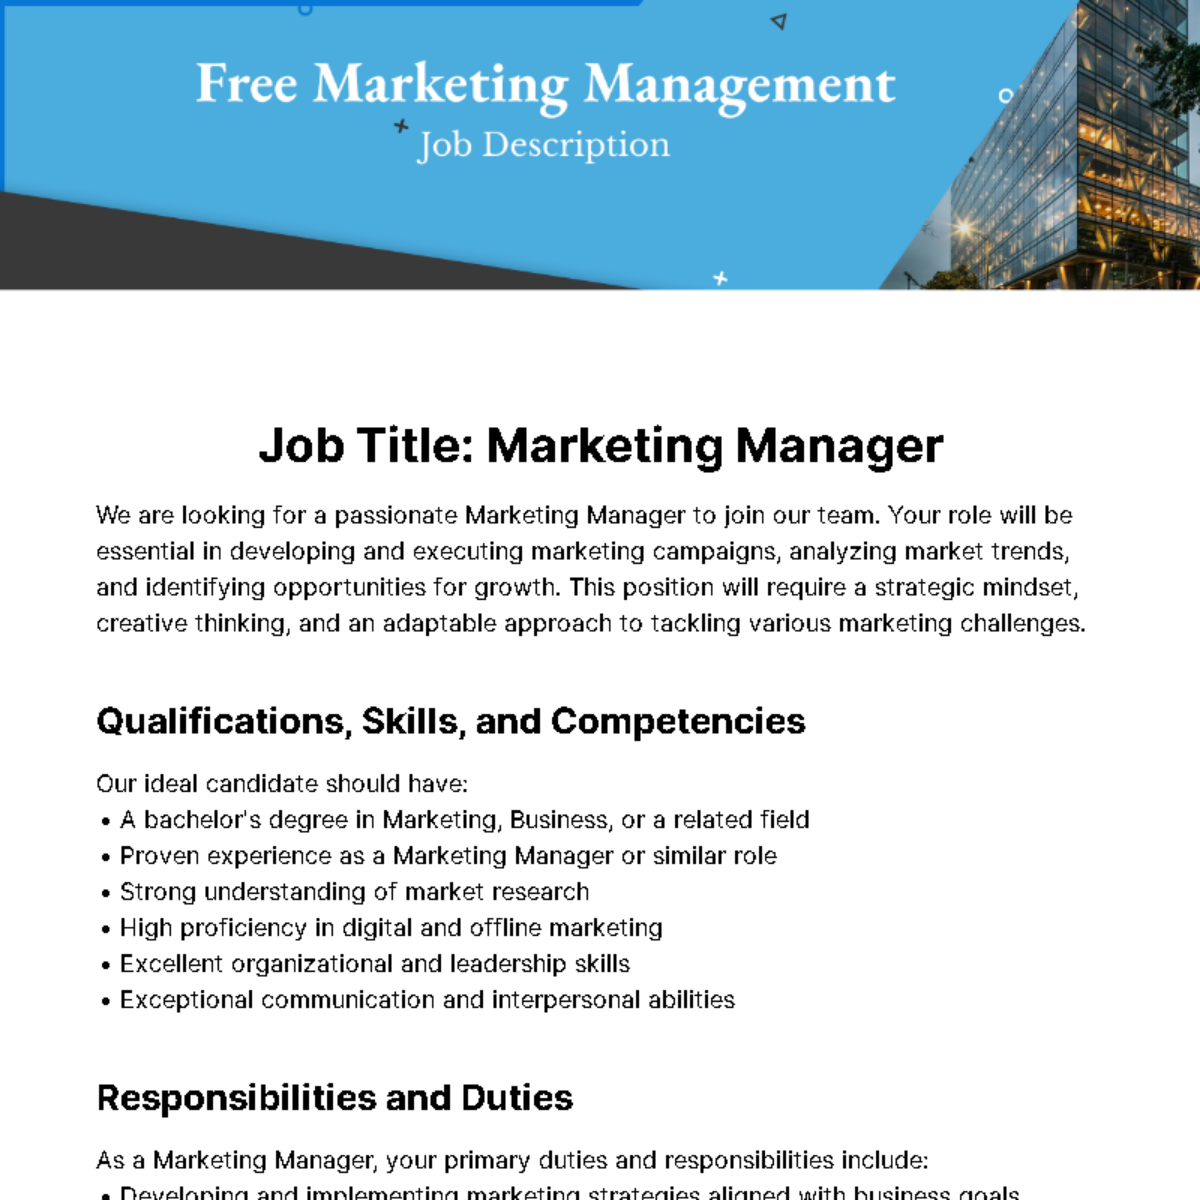 Marketing Management Job Description Template